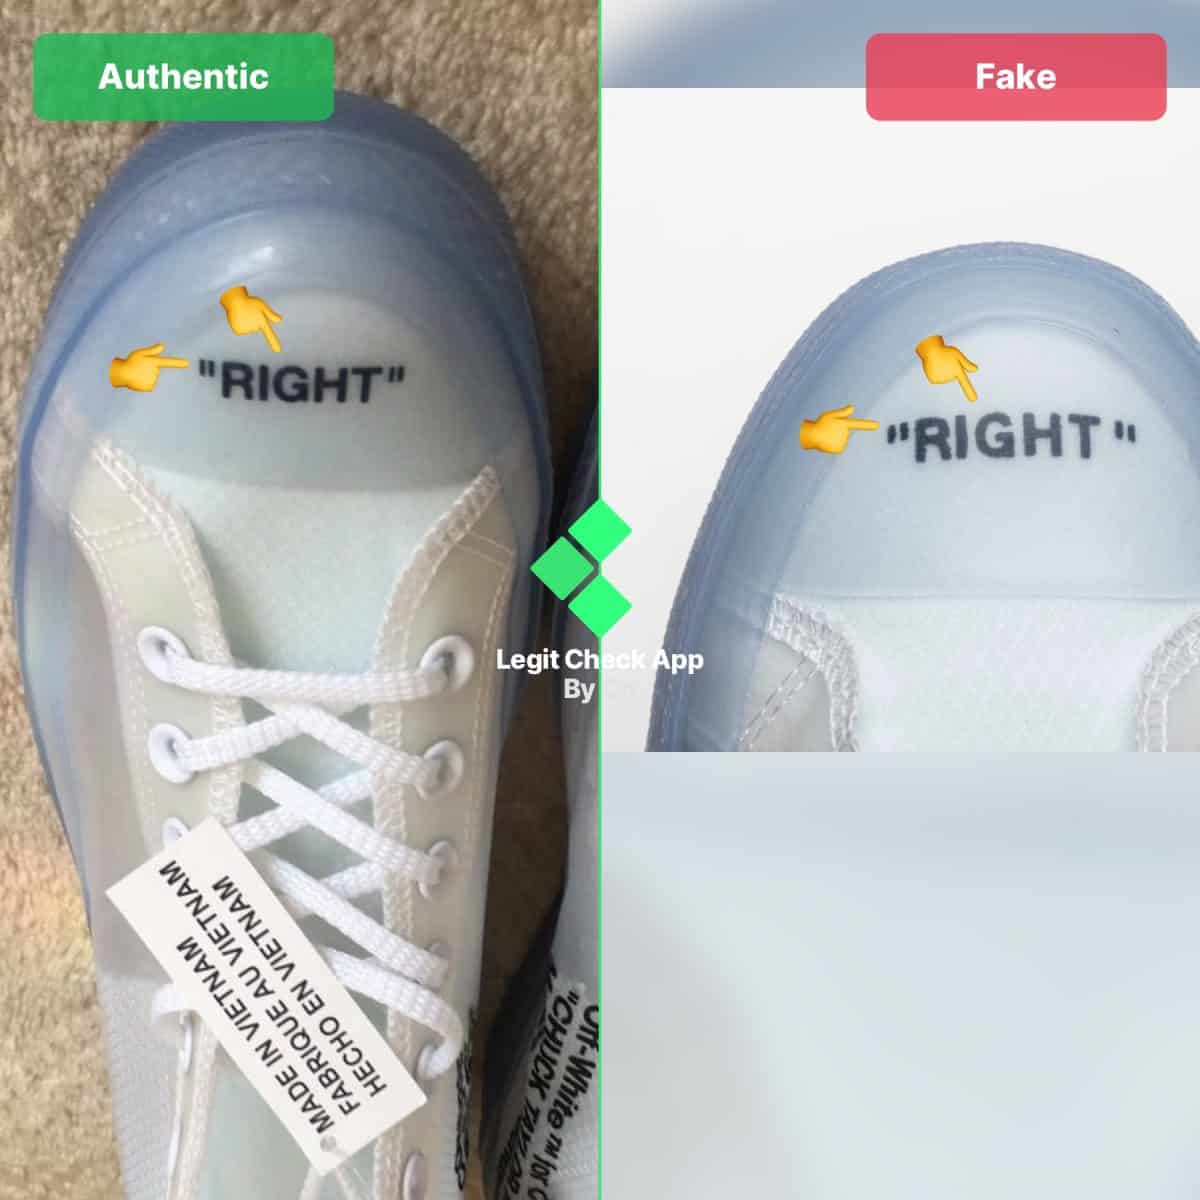 Off-White Converse Fake vs Real